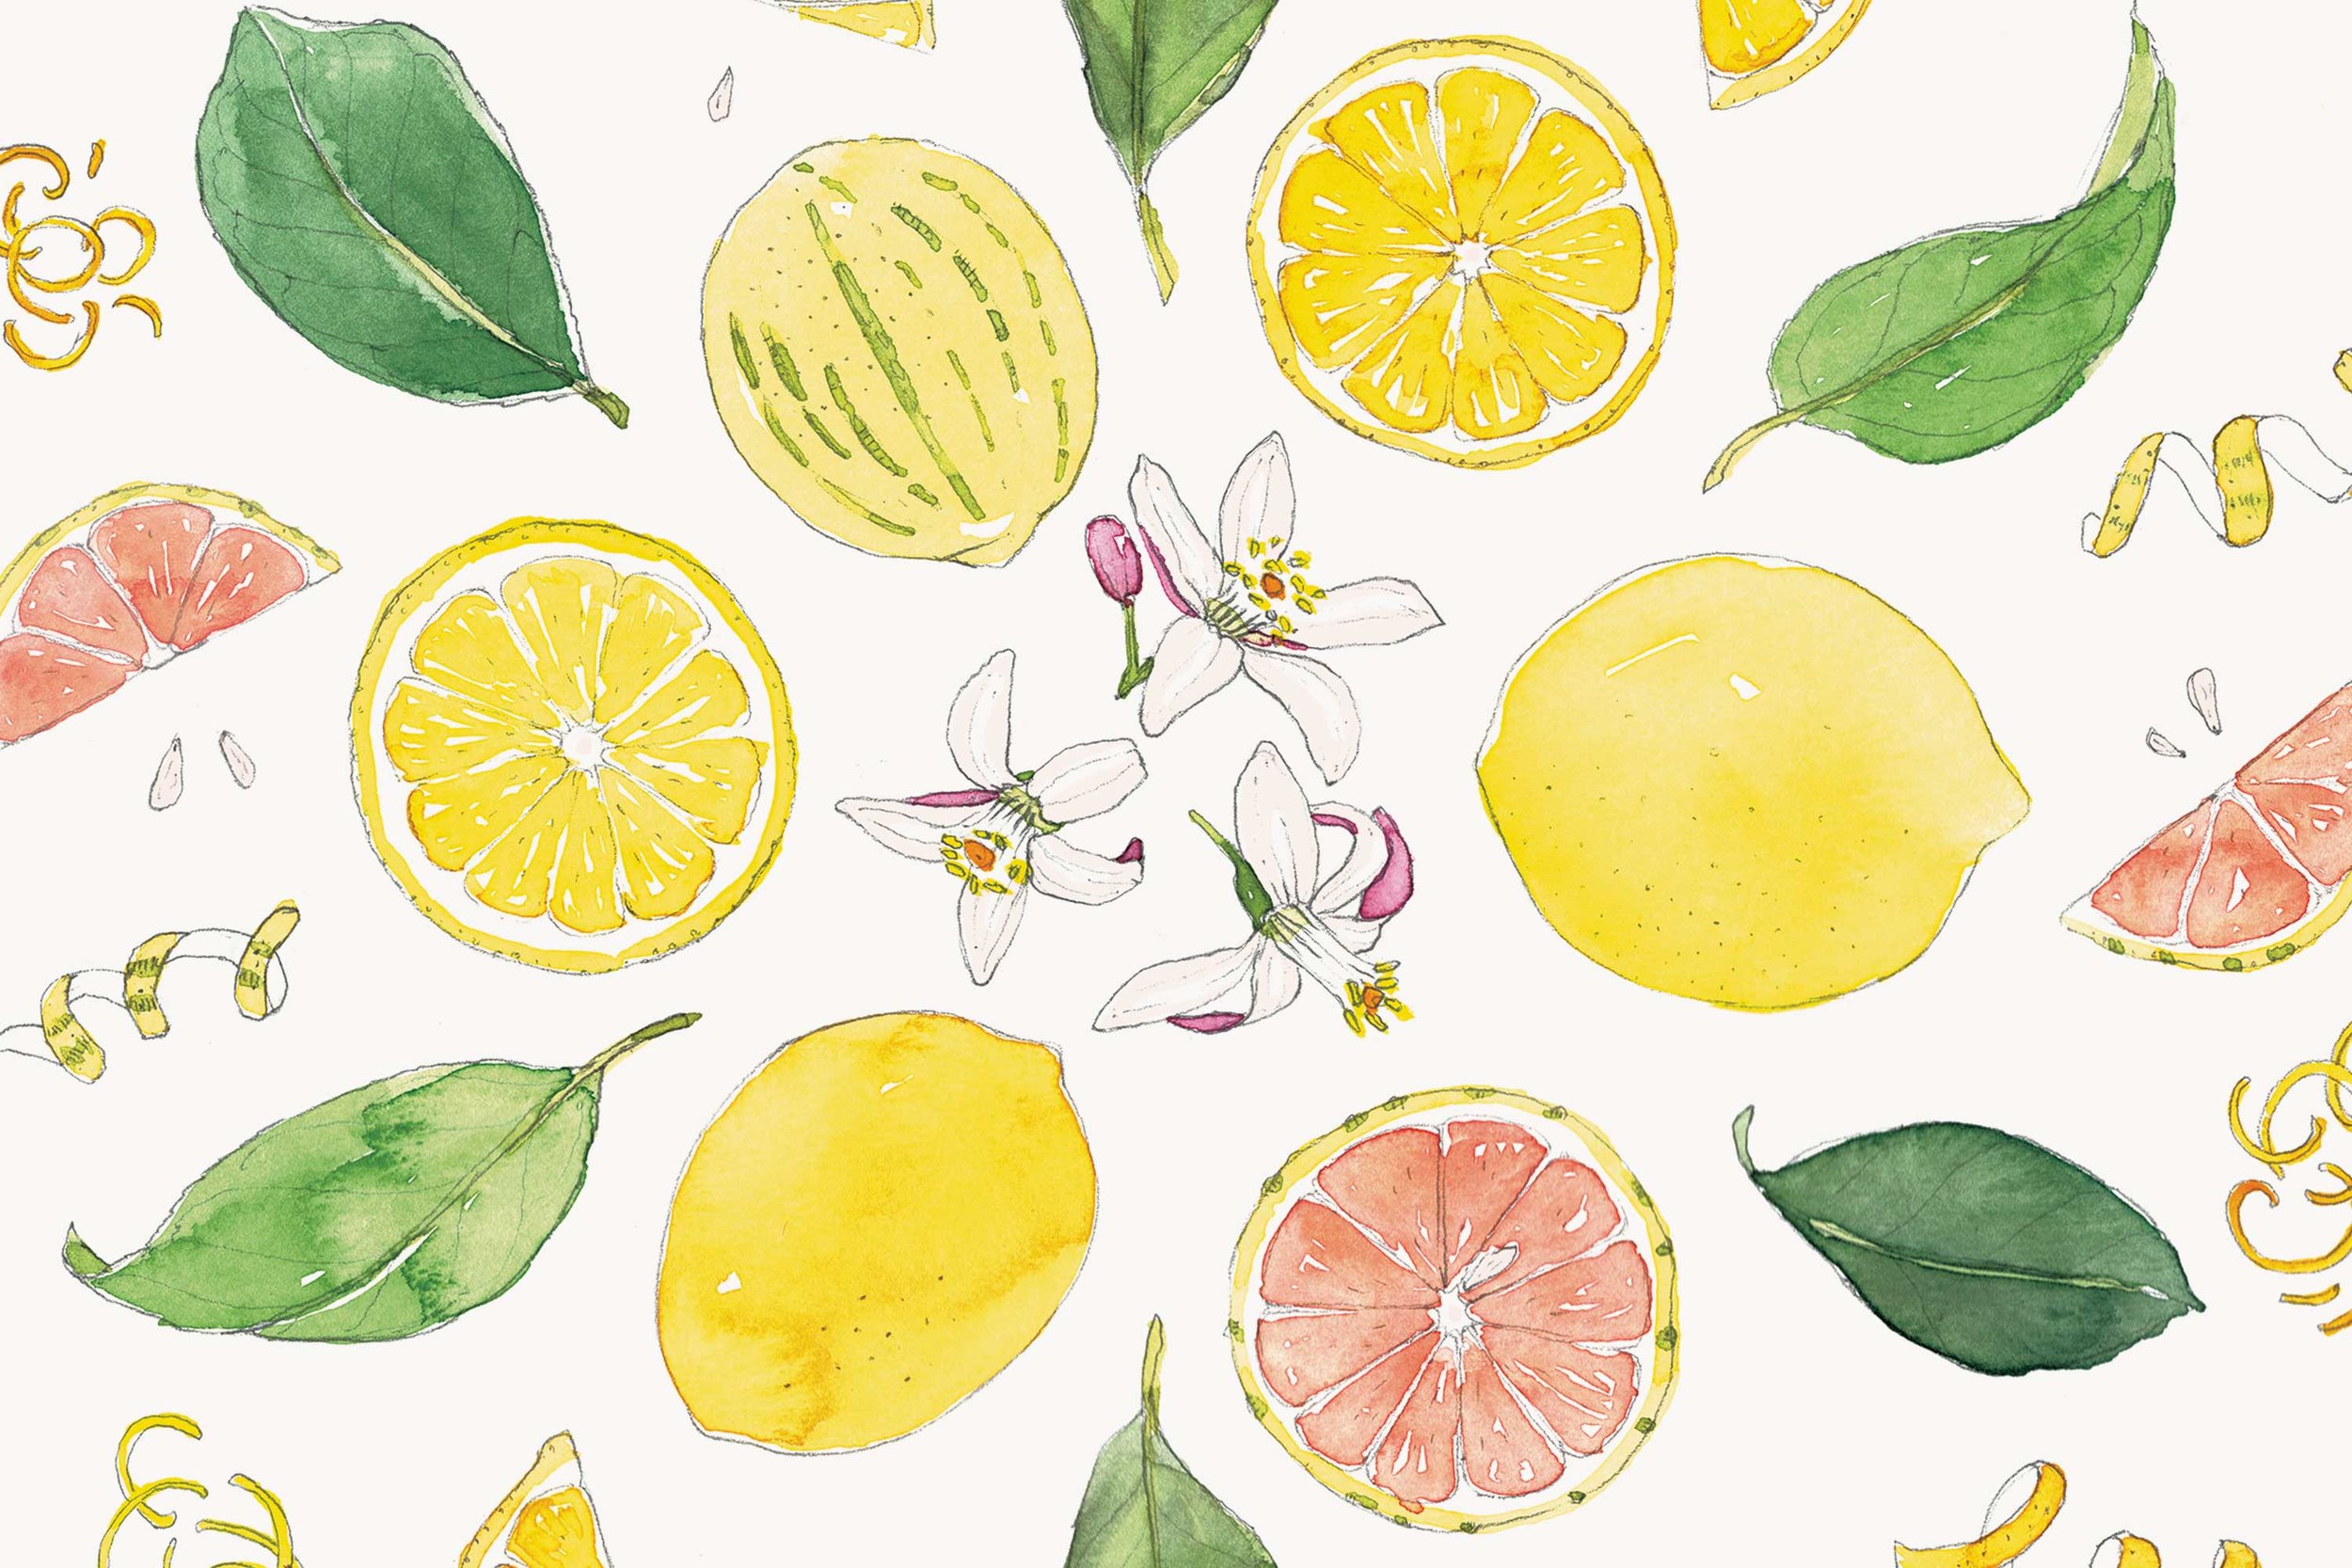 Lemons-mandala-illustration-by-Erin-Ellis-Tampa-Bay-Times-Taste.jpg